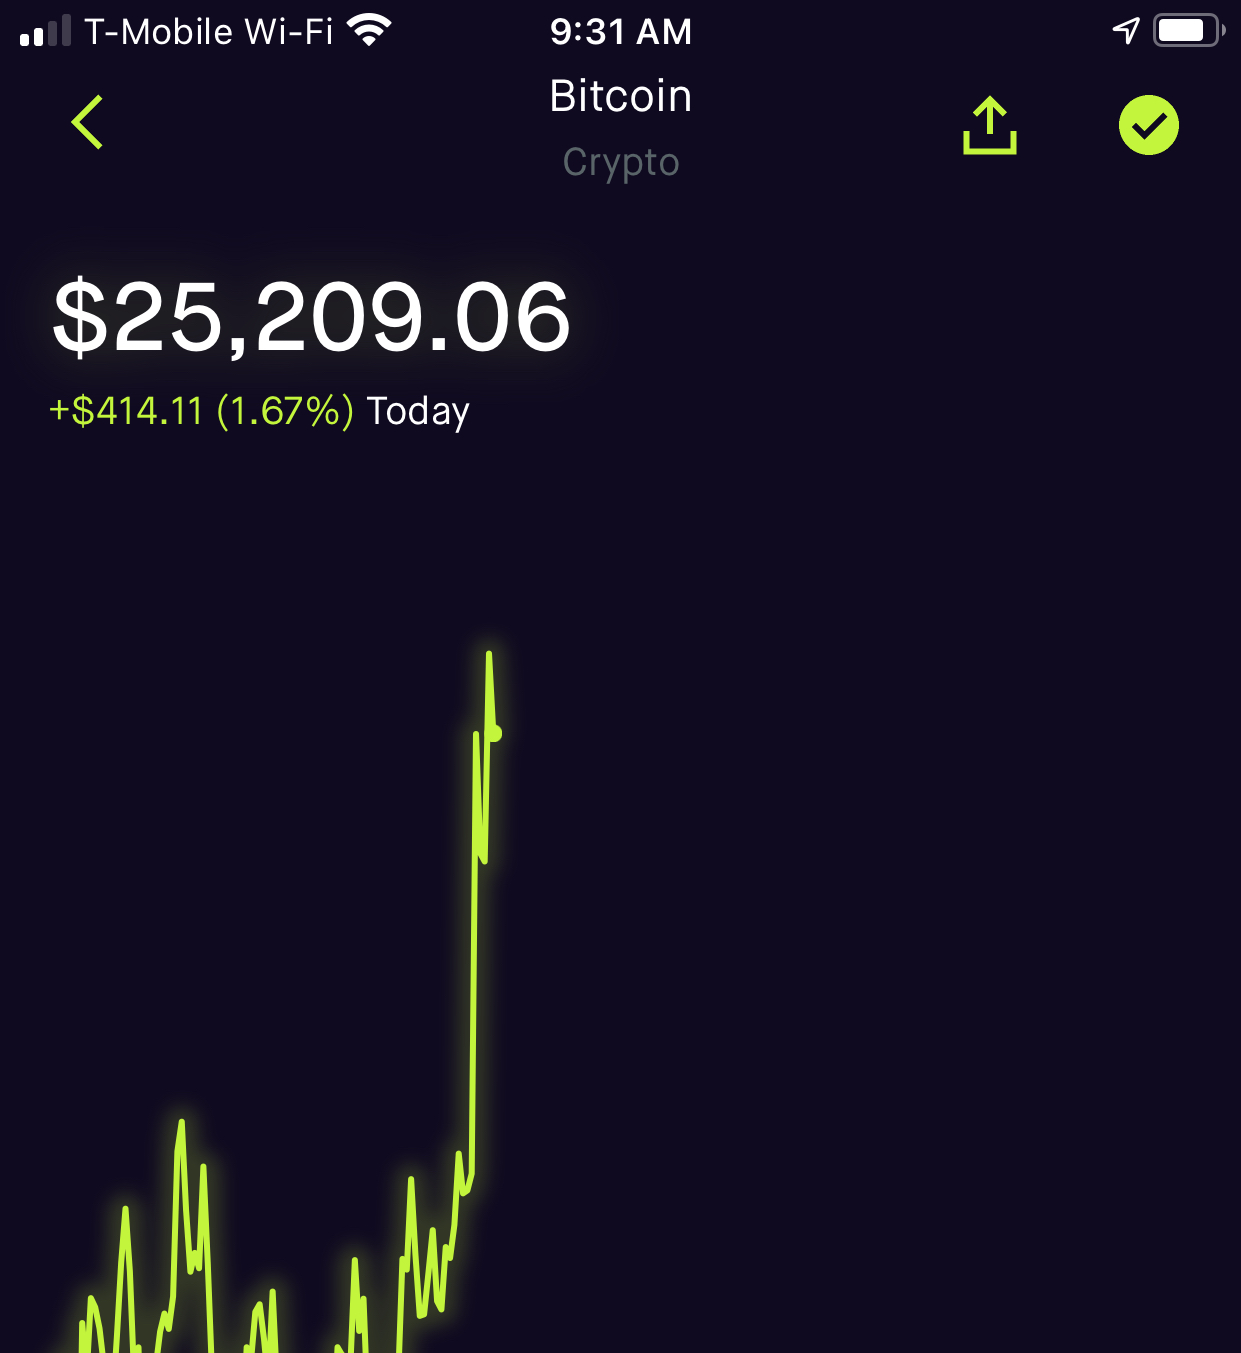 Bitcoin hits 25k